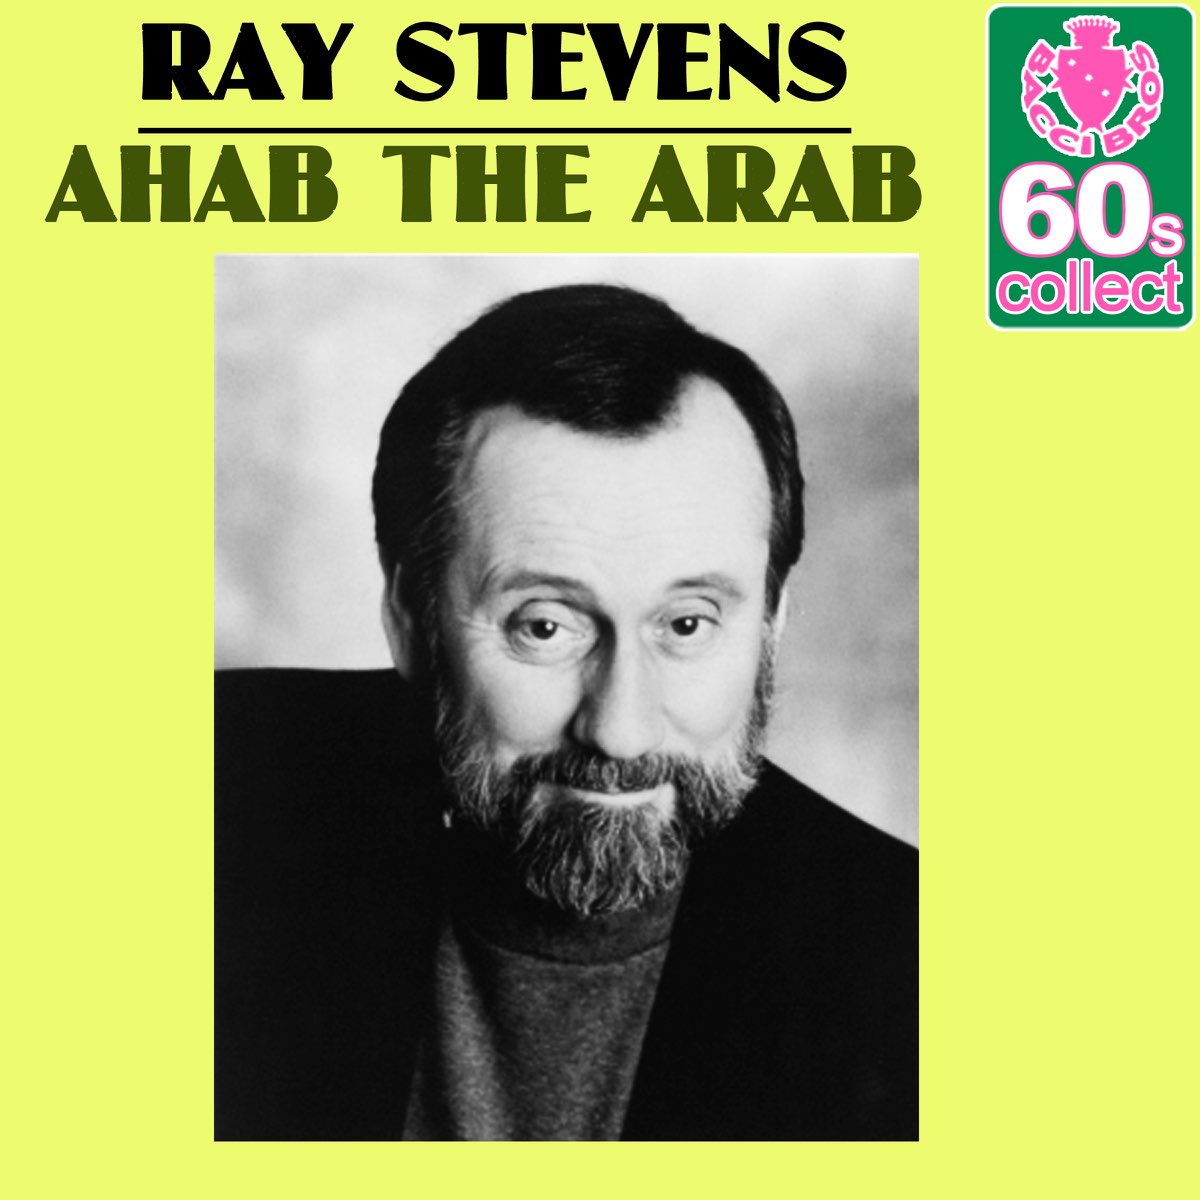 Ahab the Arab (Remastered) - Single - Album by Ray Stevens - Apple Music